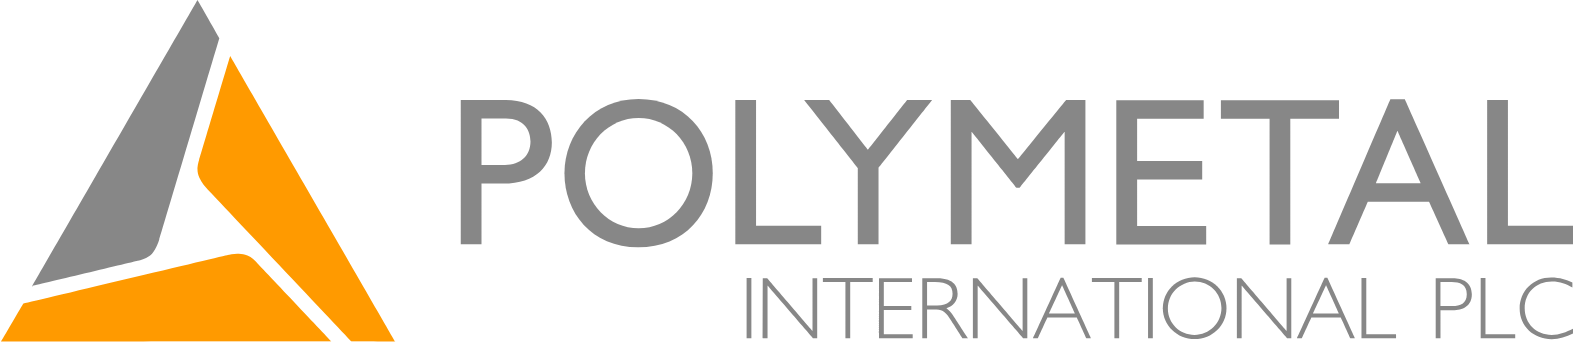 Polymetal logo large (transparent PNG)